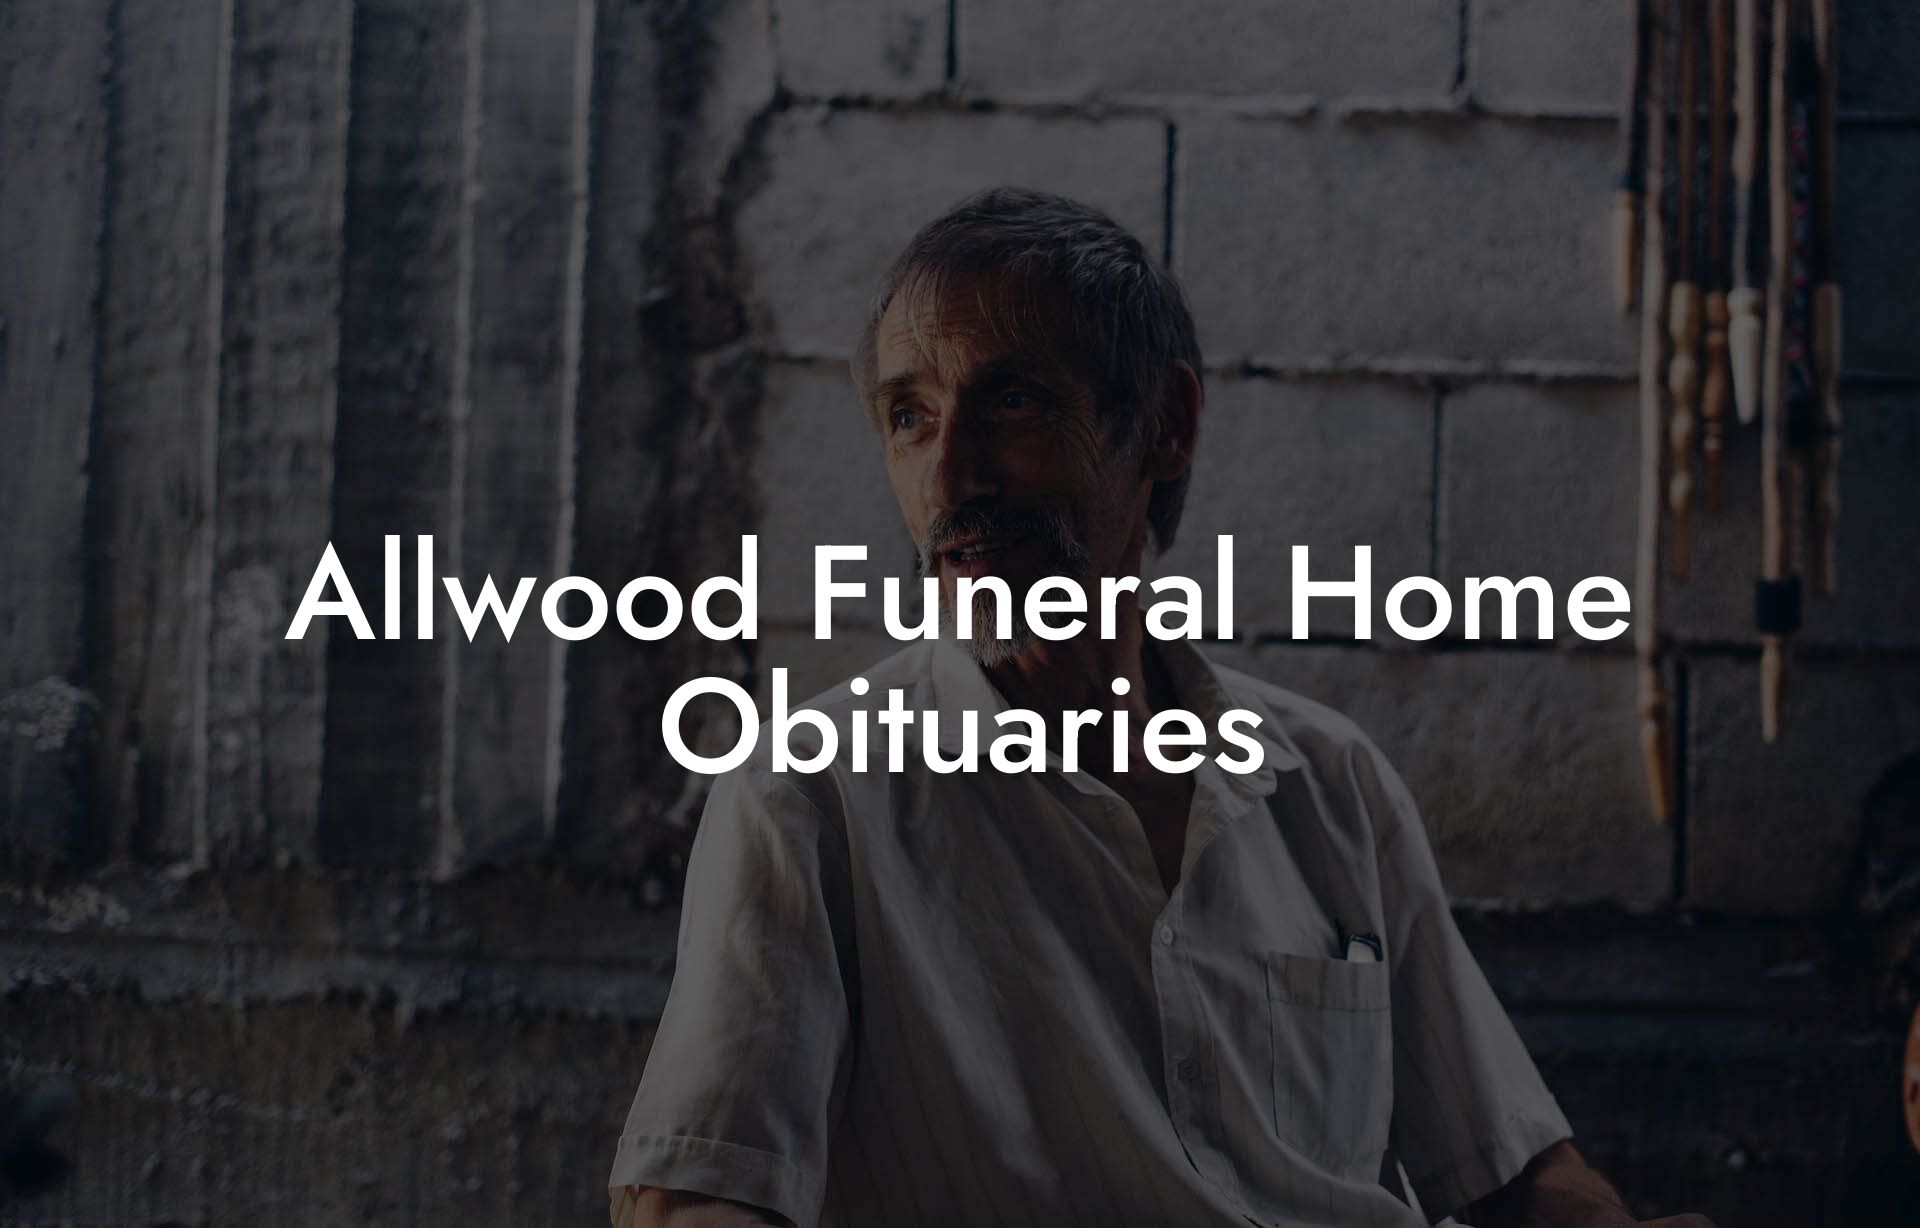 Allwood Funeral Home Obituaries